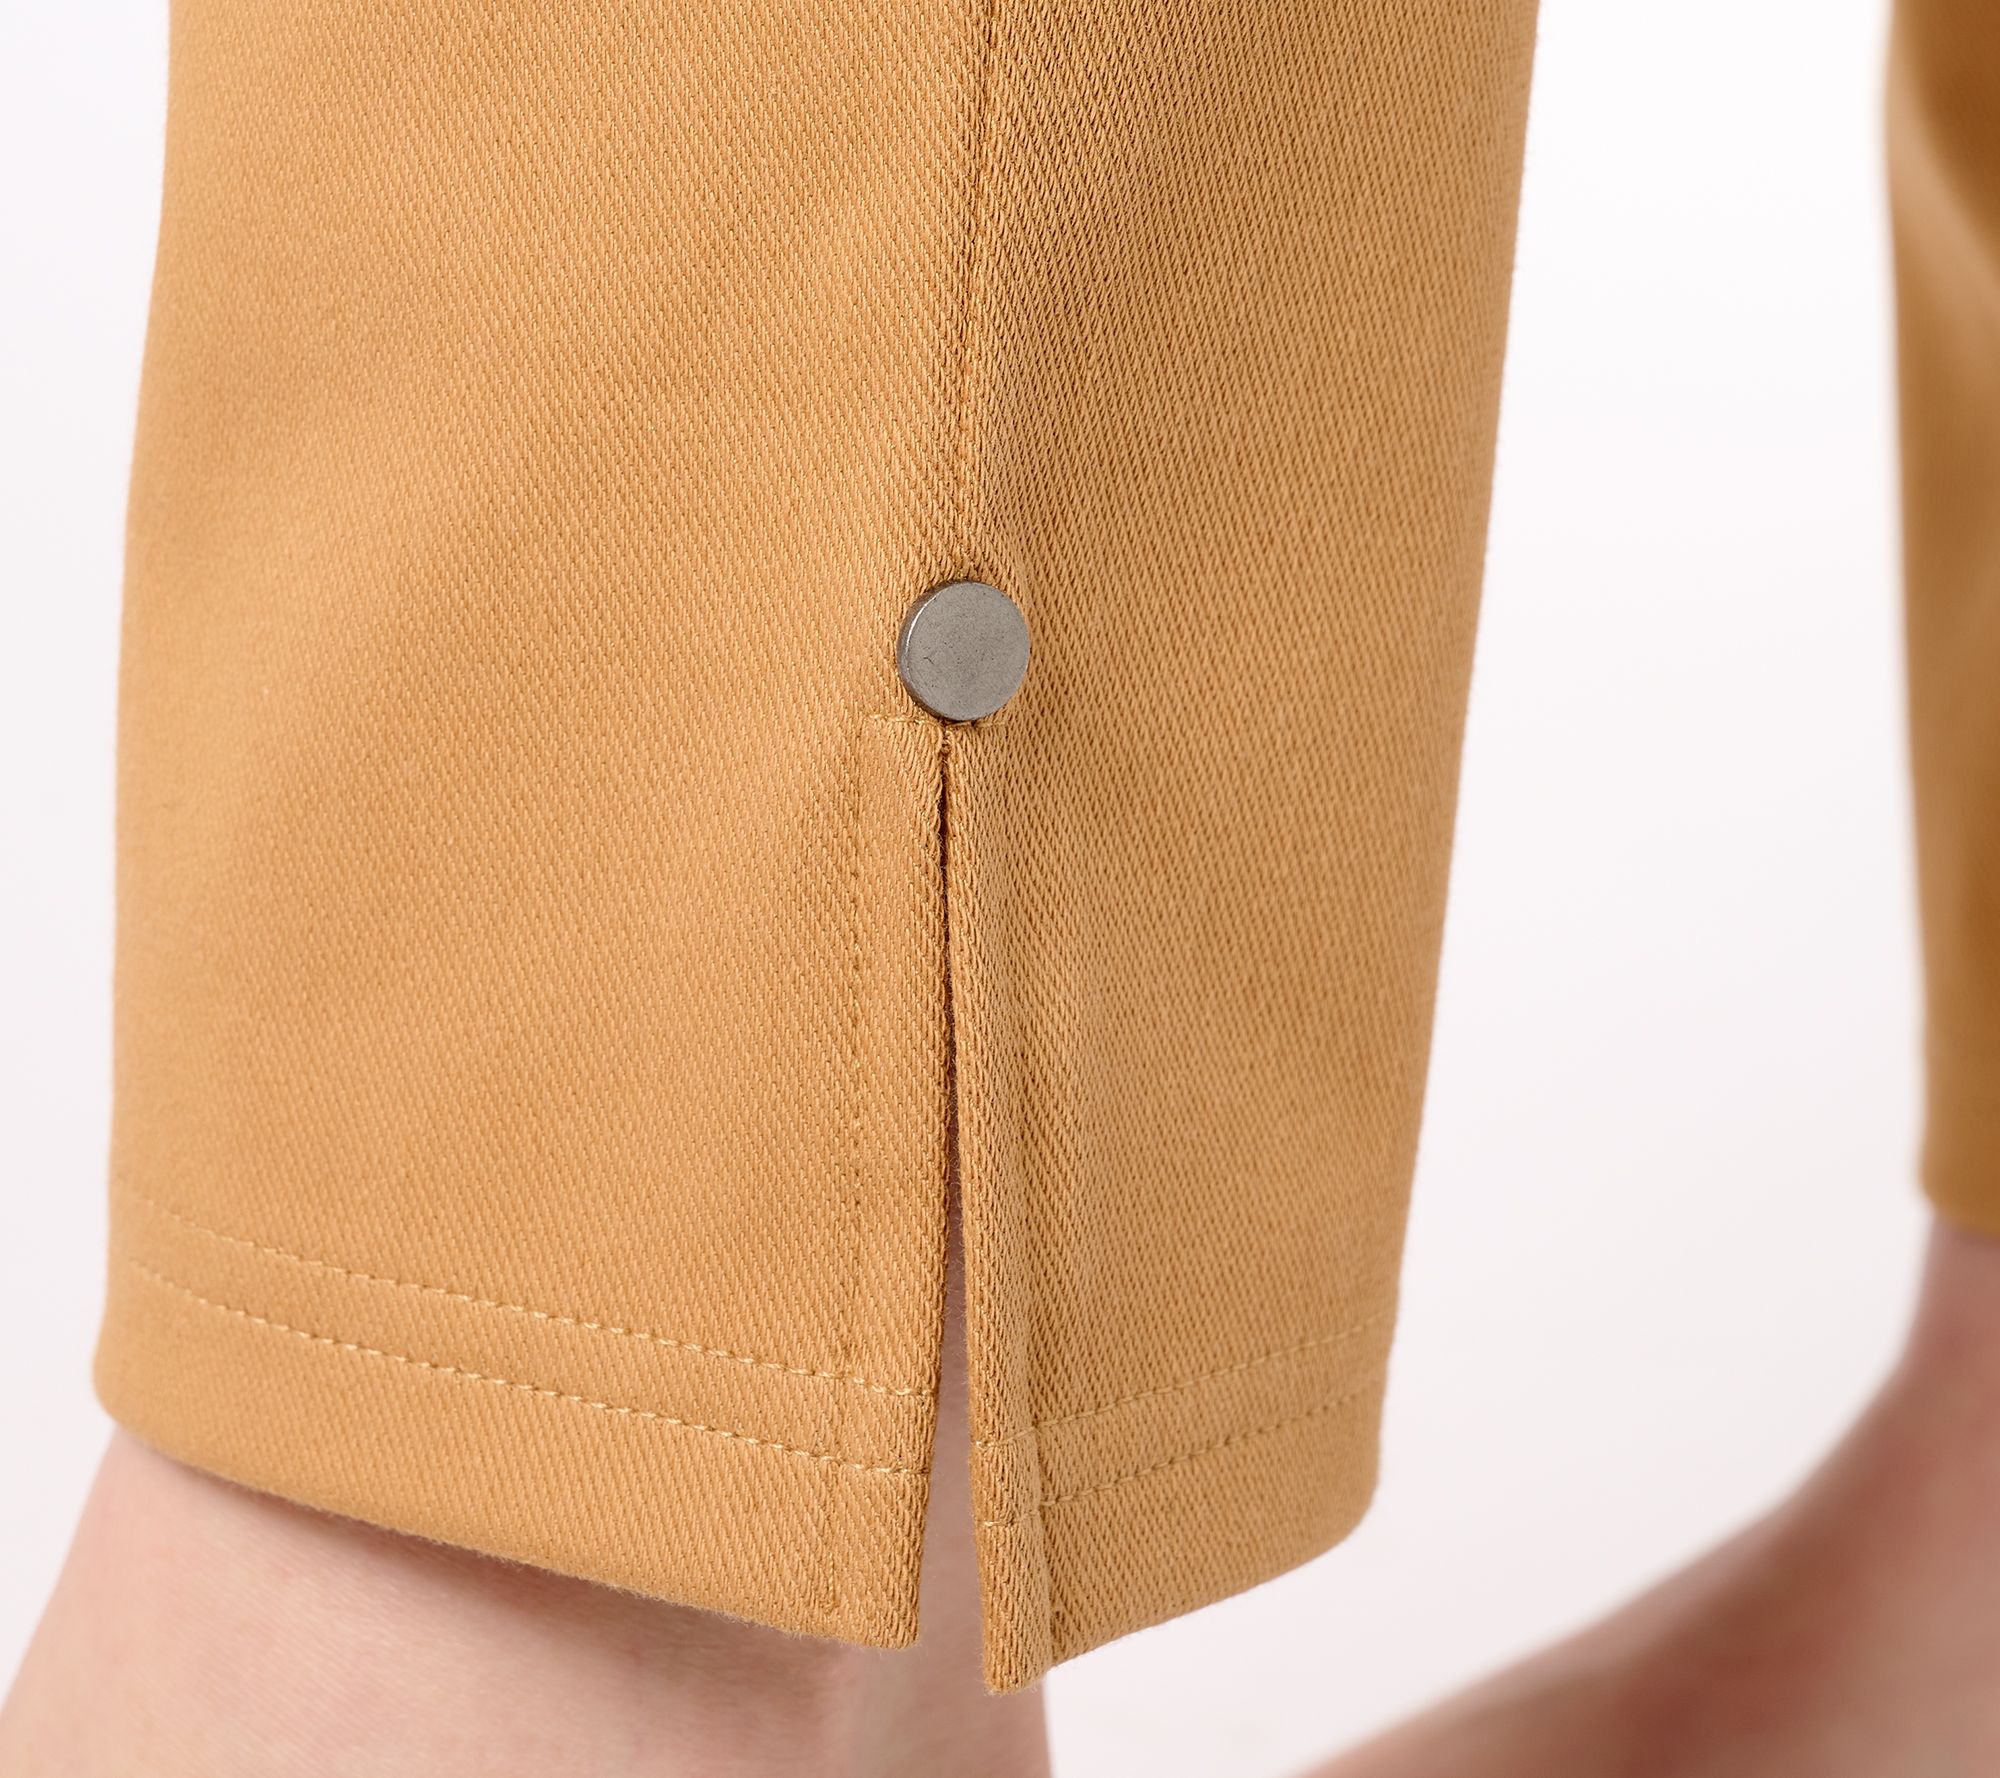 Denim & Co. Knit Easy Flex Twill Slim- Straight Pull- On Pants on QVC 